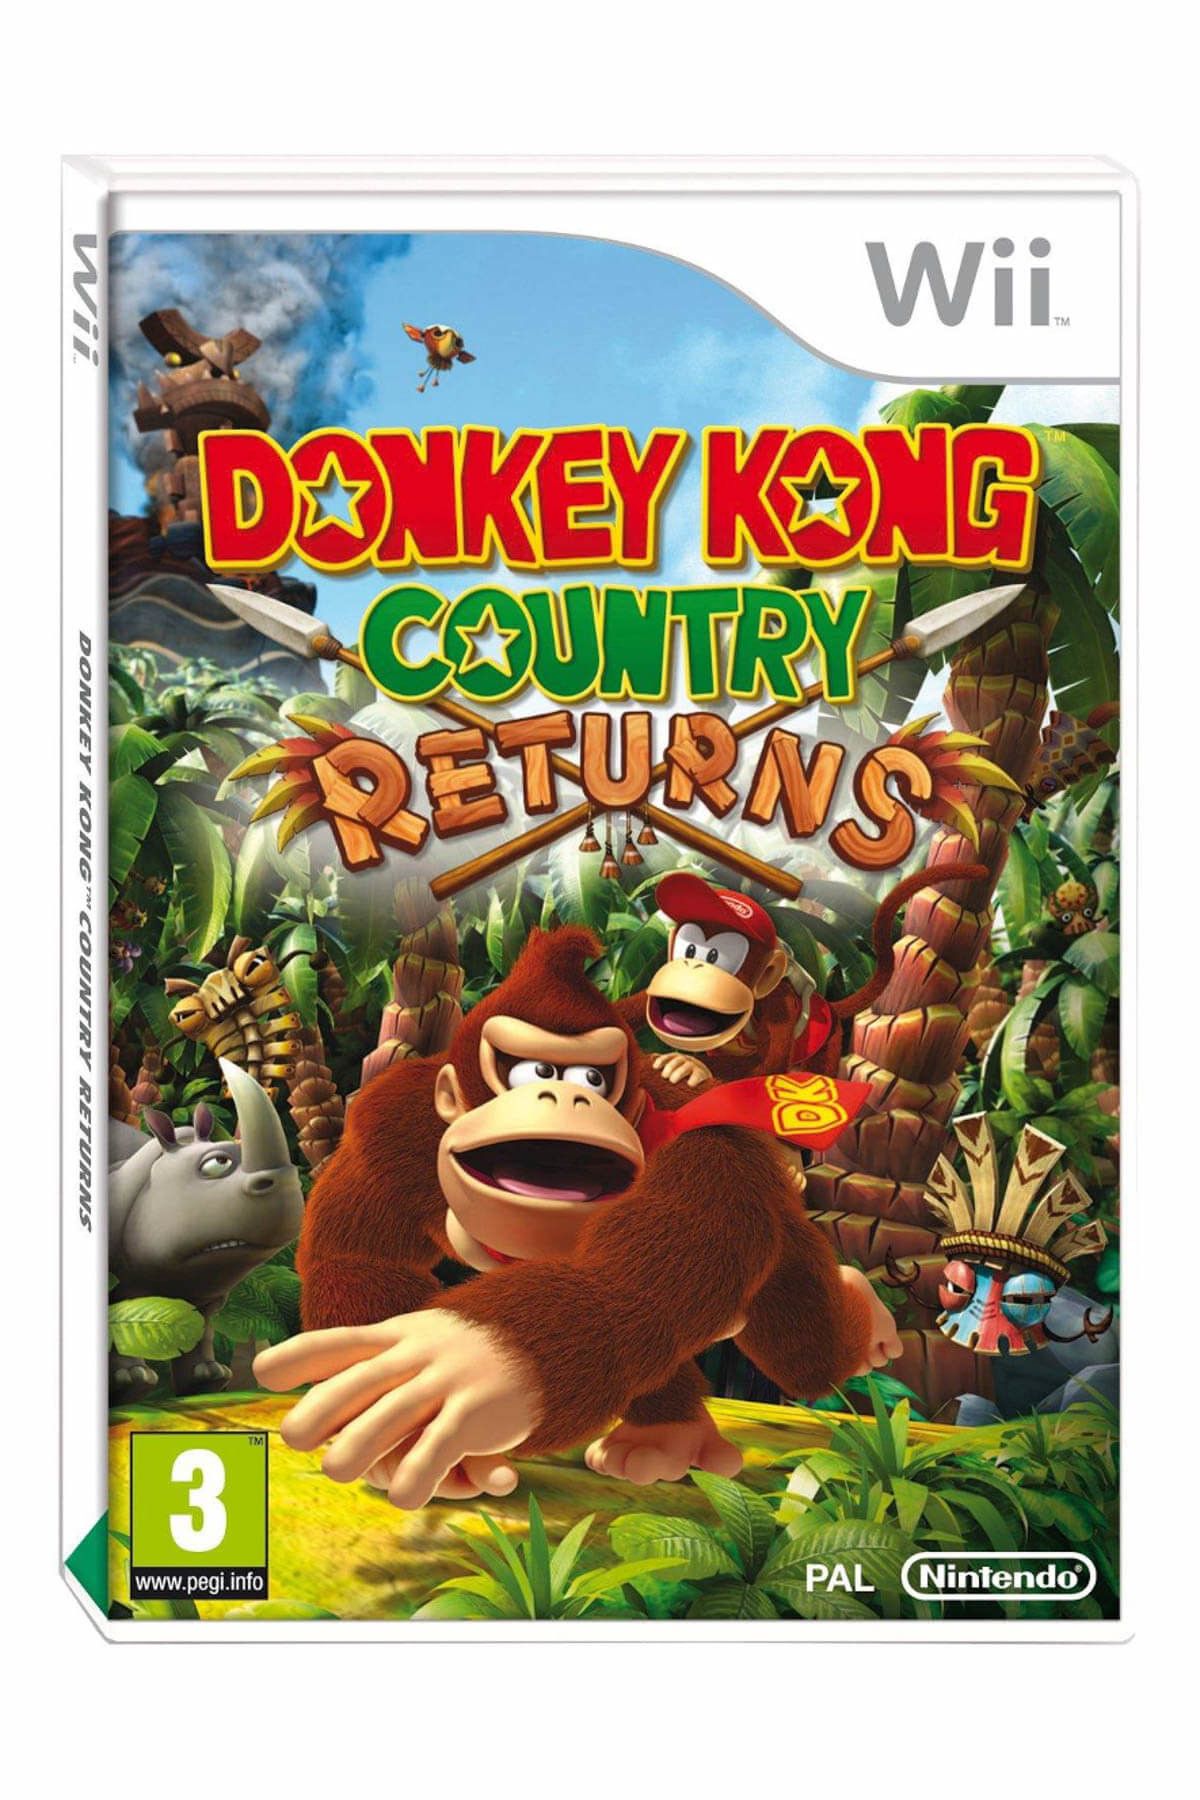 Nintendo Wii Donkey Kong Country Returns